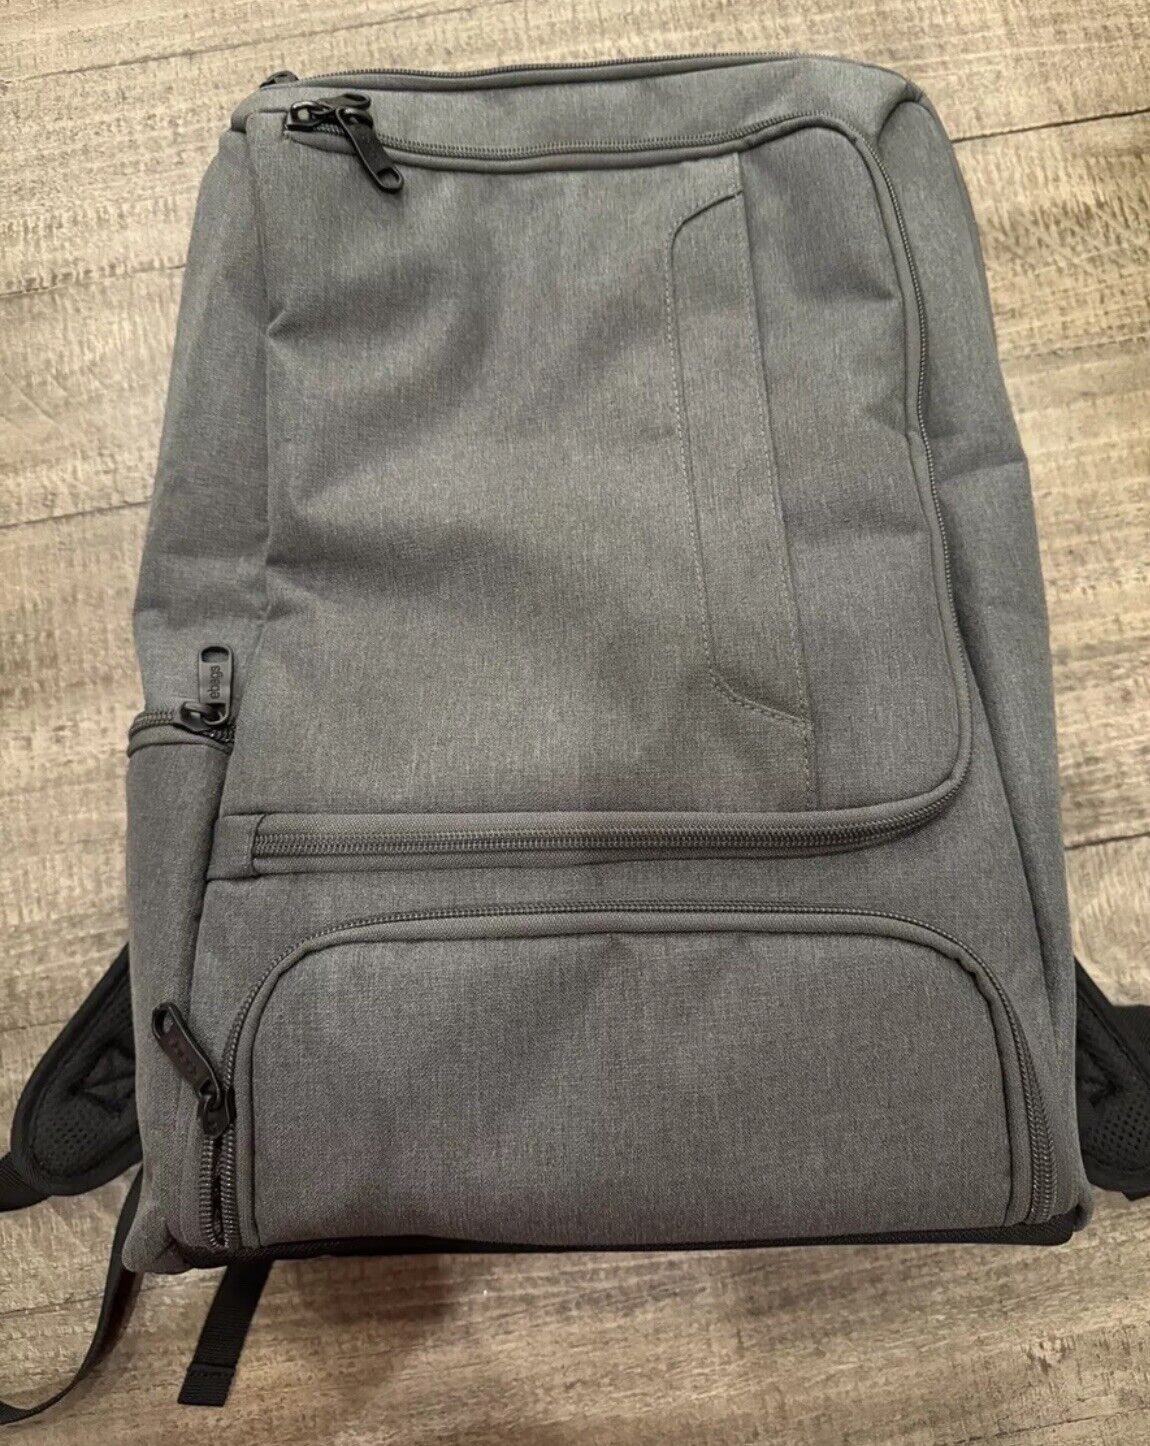 ebags pro slim laptop backpack Heathered Gray Orange inside Never Used